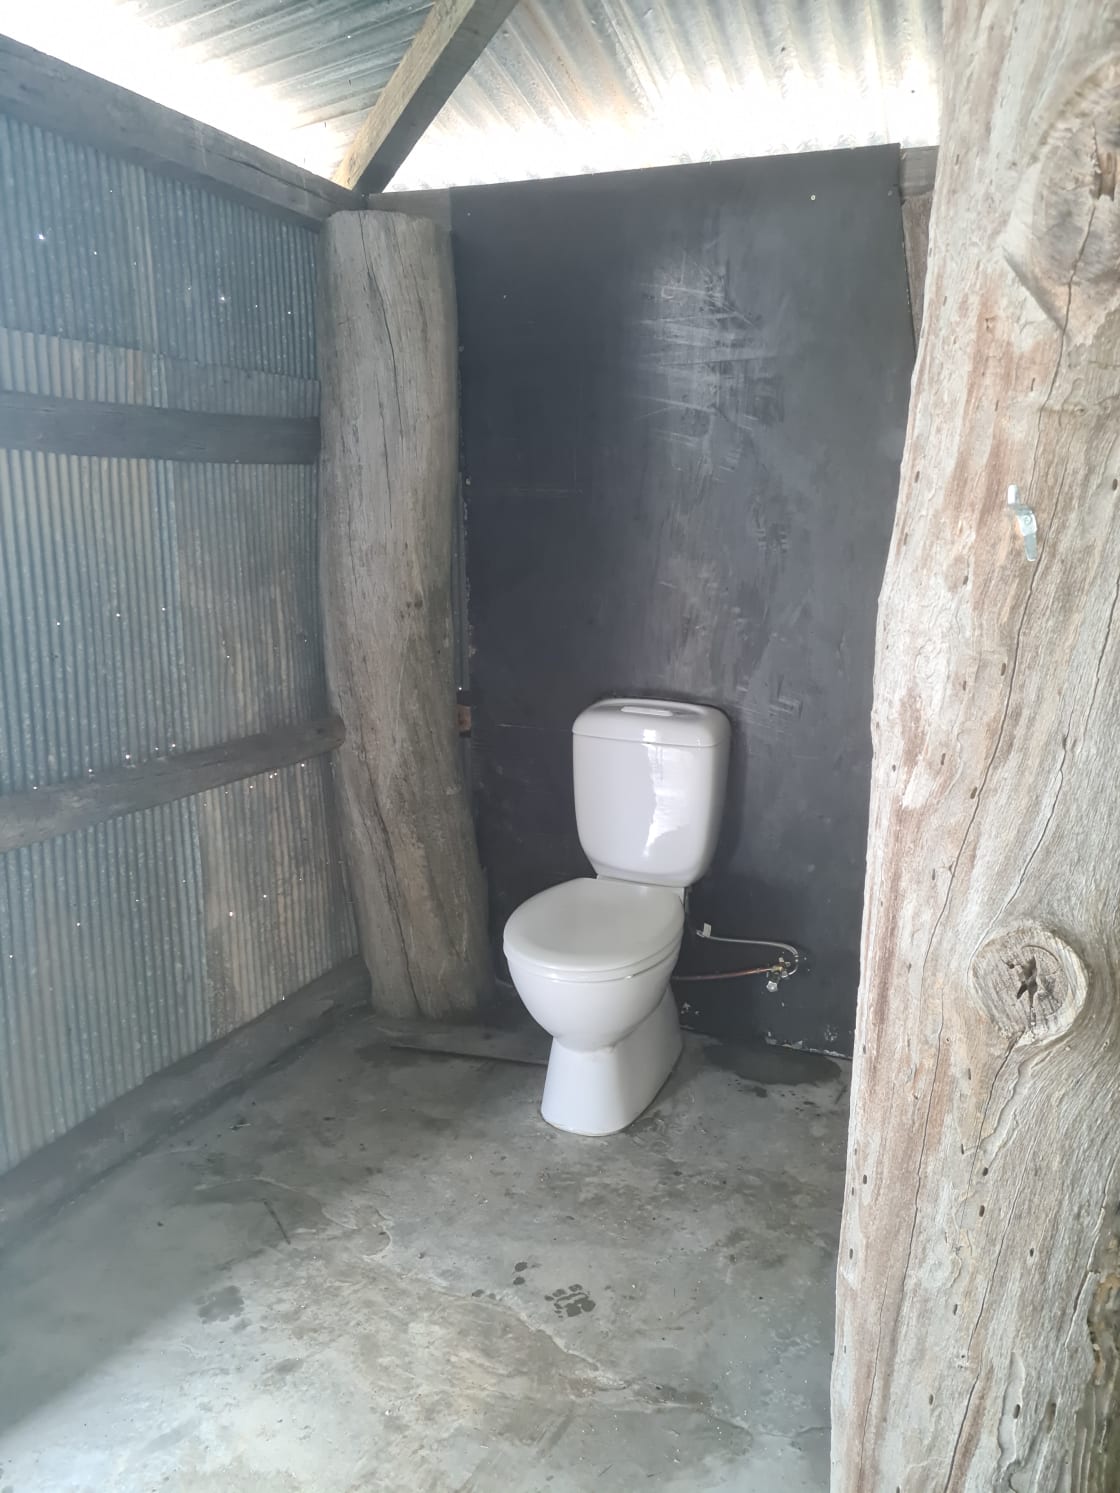 The Toilet.